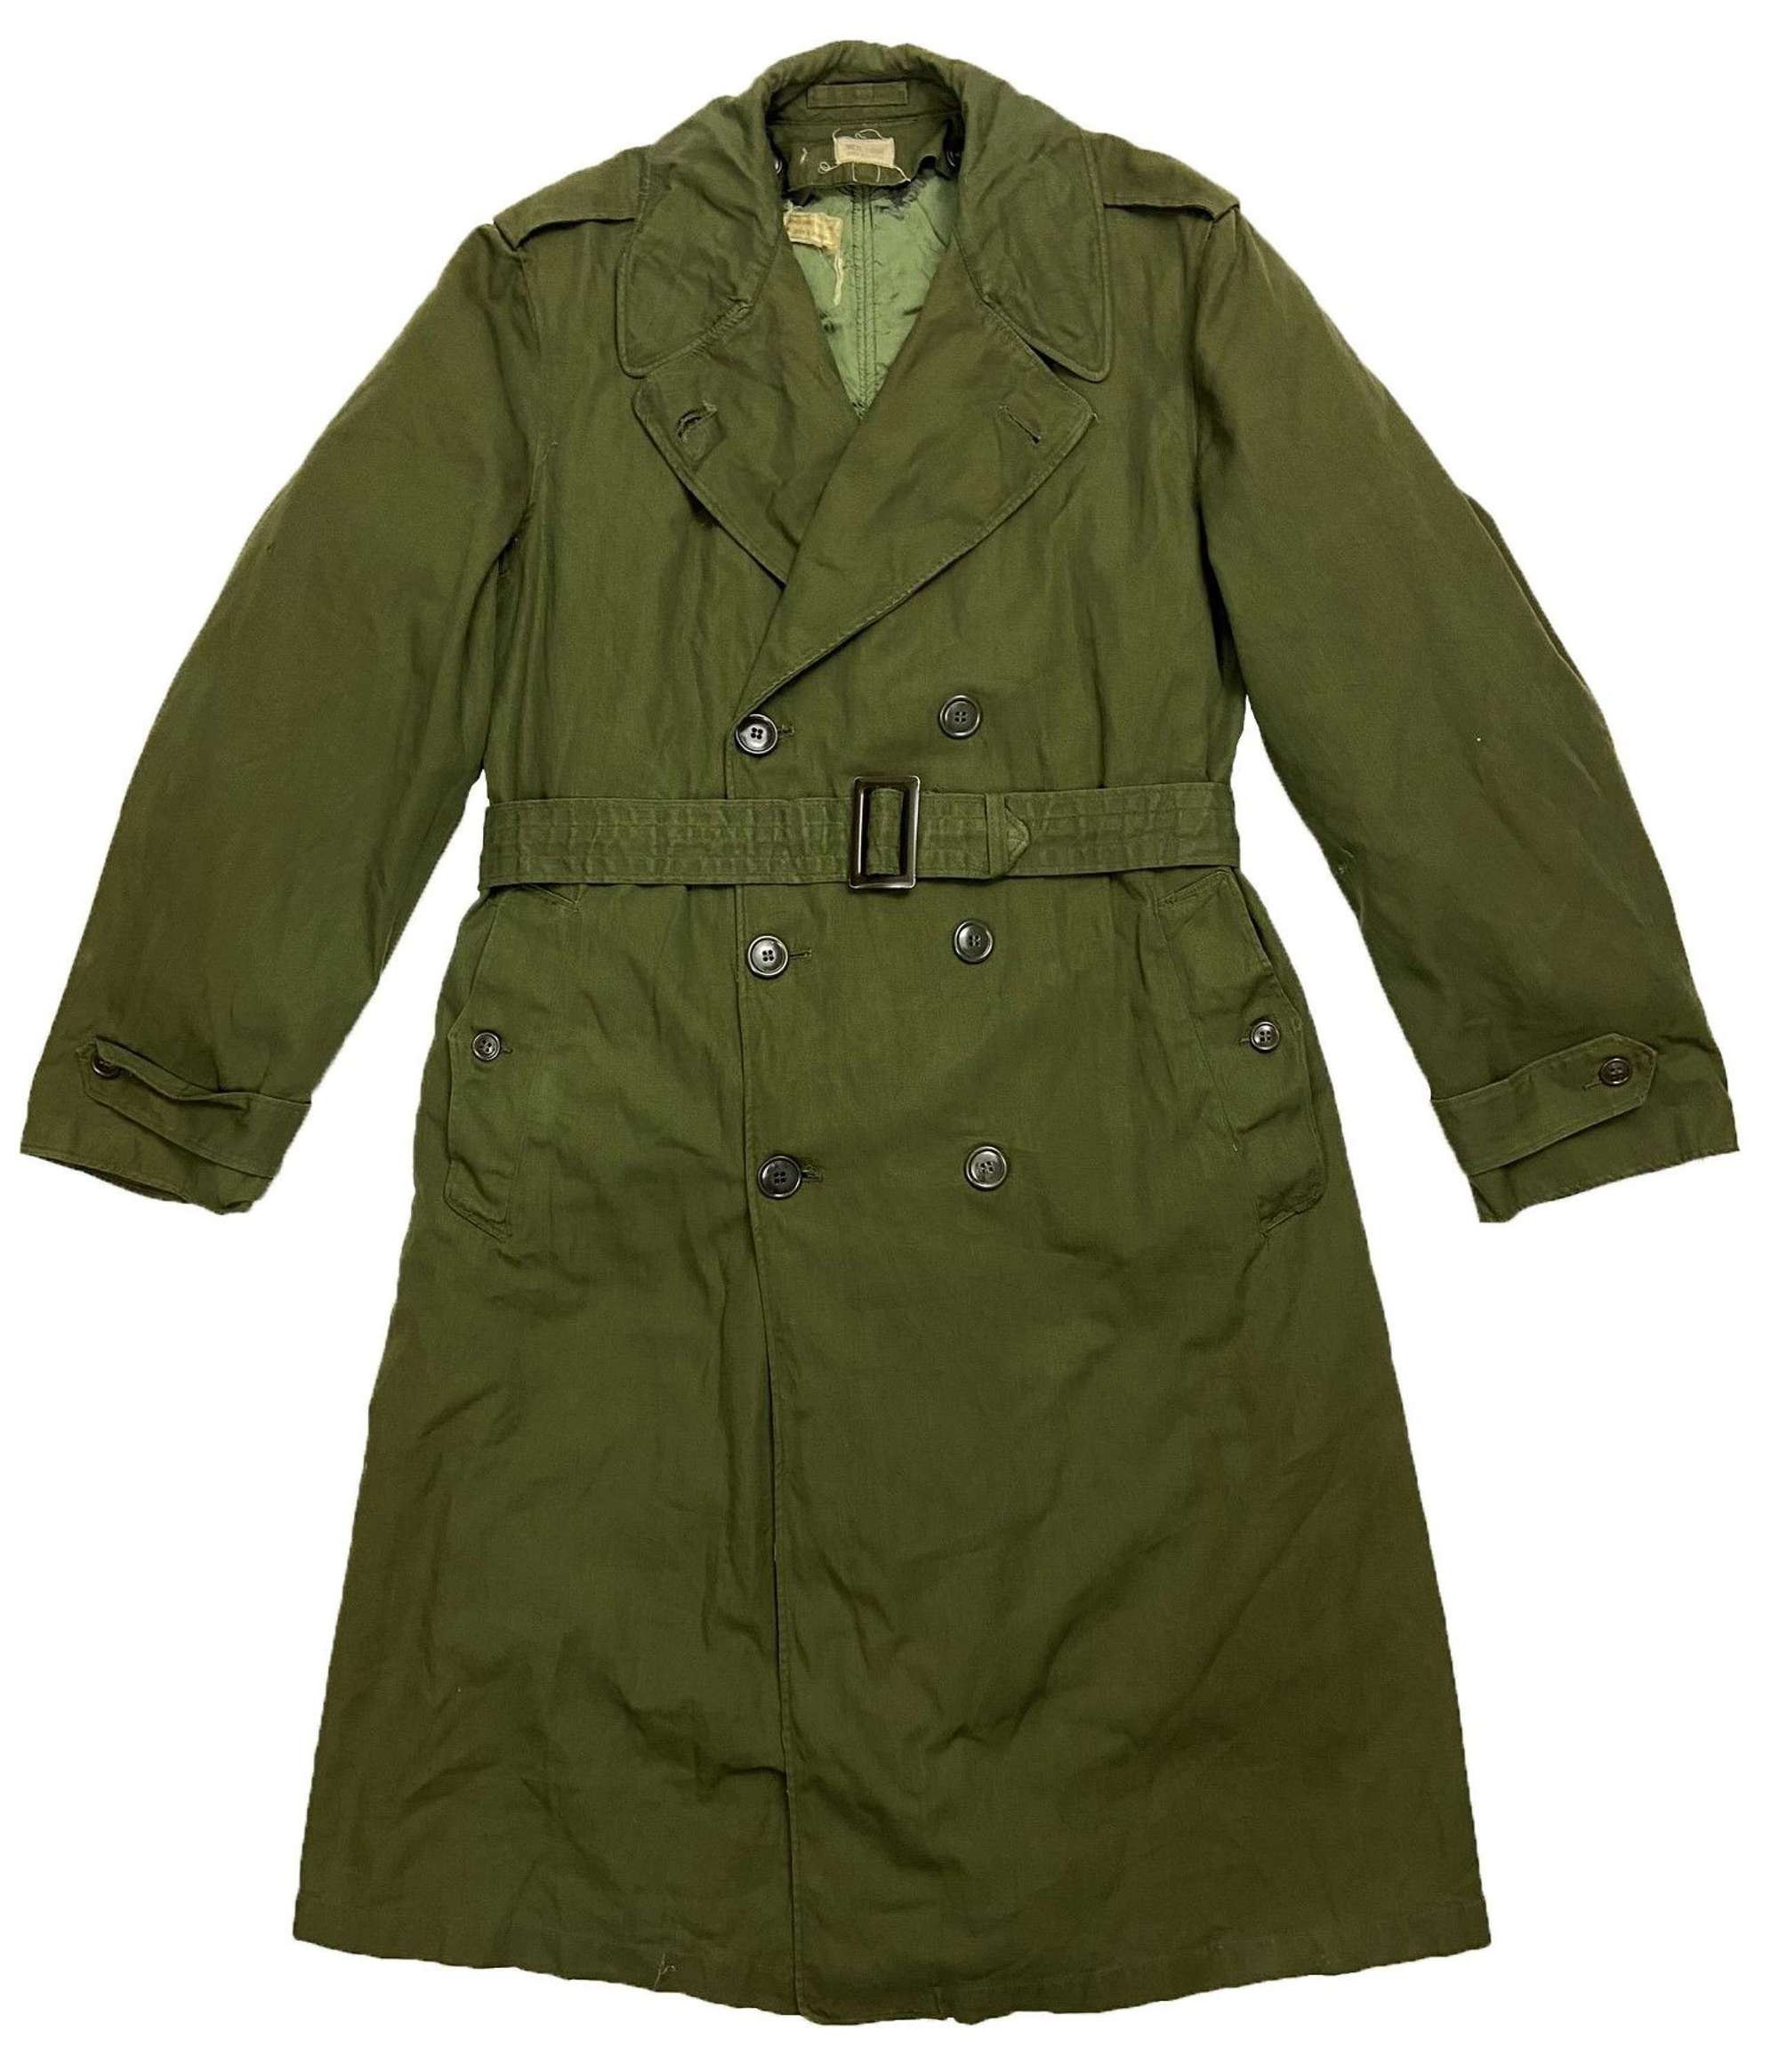 Original 1960s US Army O.G. 107 Raincoat - Size Medium Long